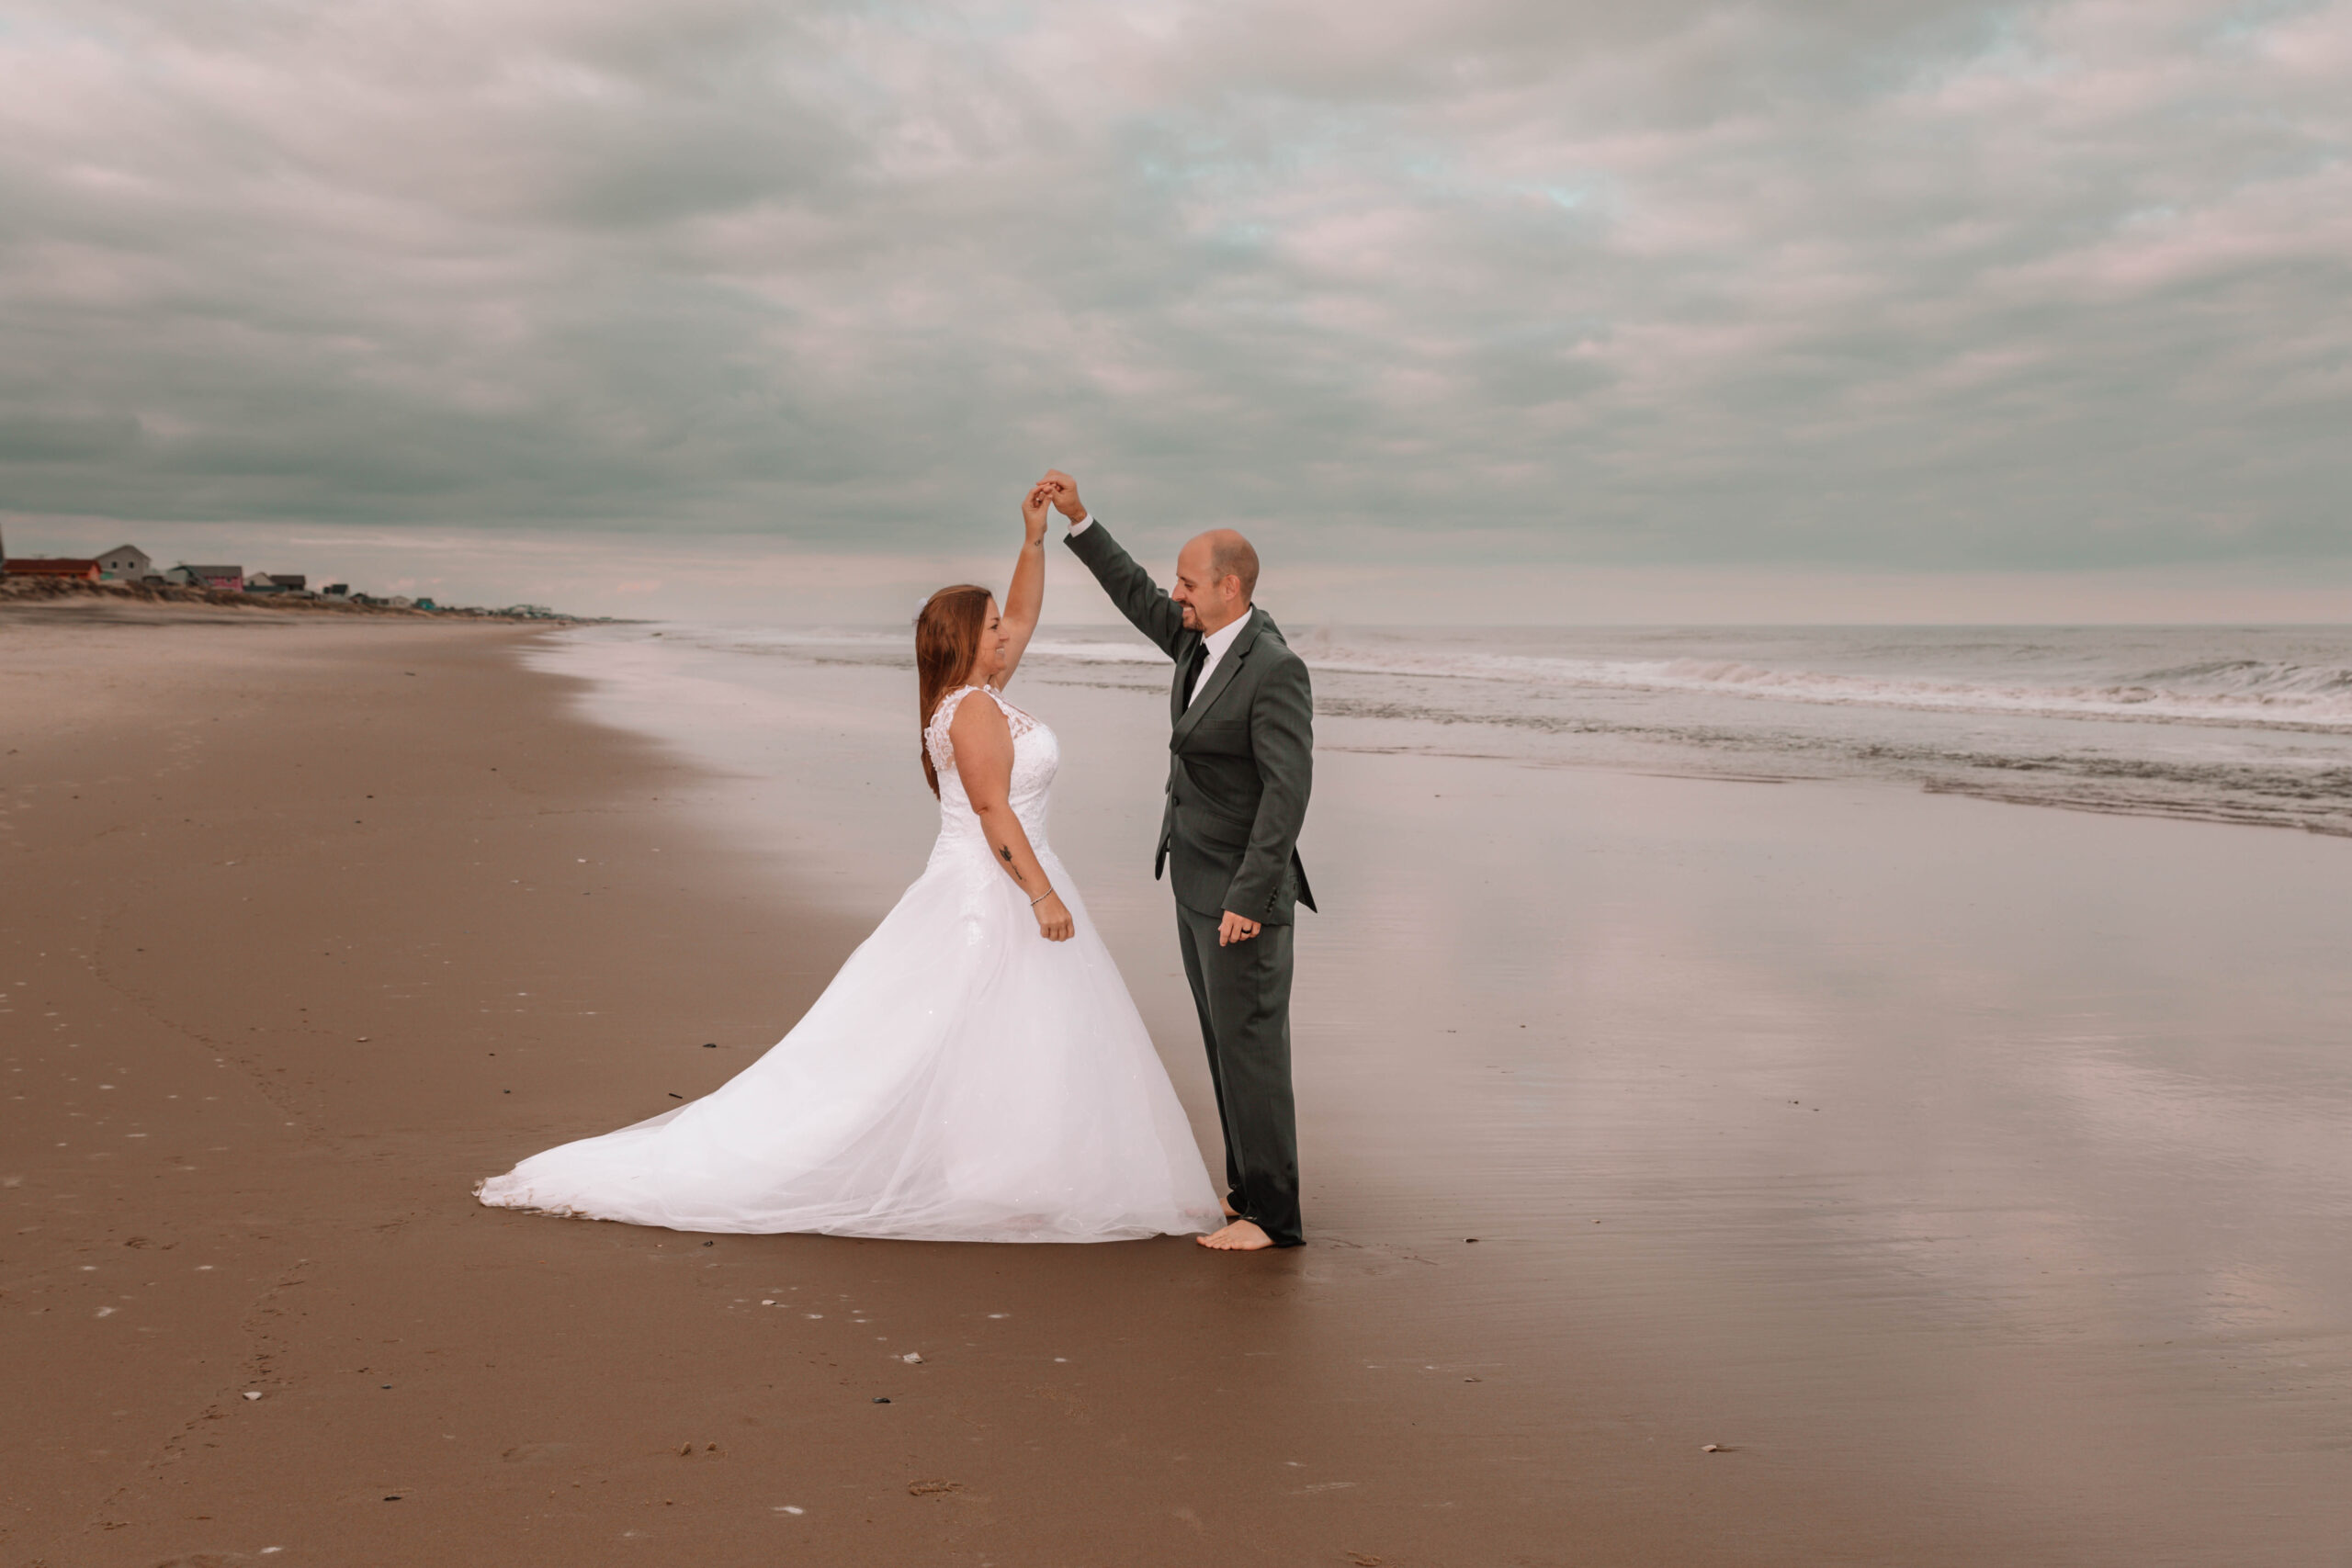 wedding dress man and woman on beach obx kitty hawk